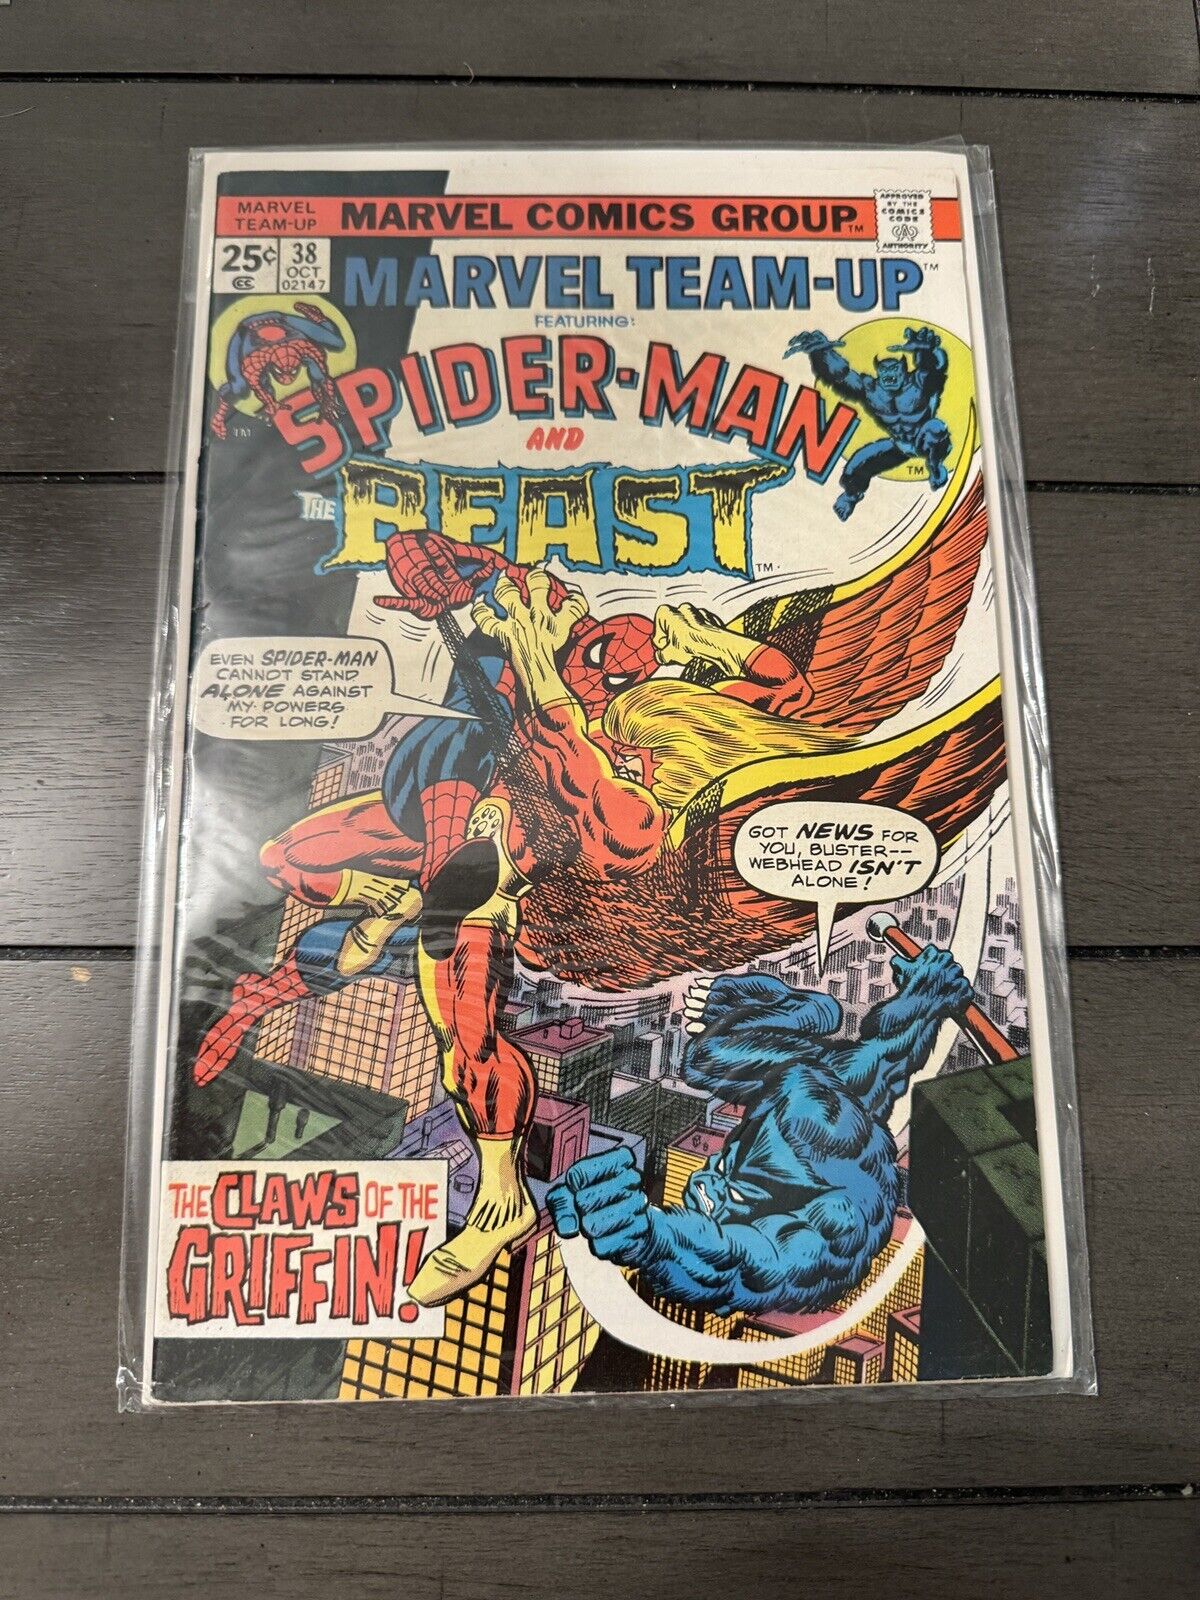 MARVEL TEAM-UP #38 1975; Spider-Man and Beast